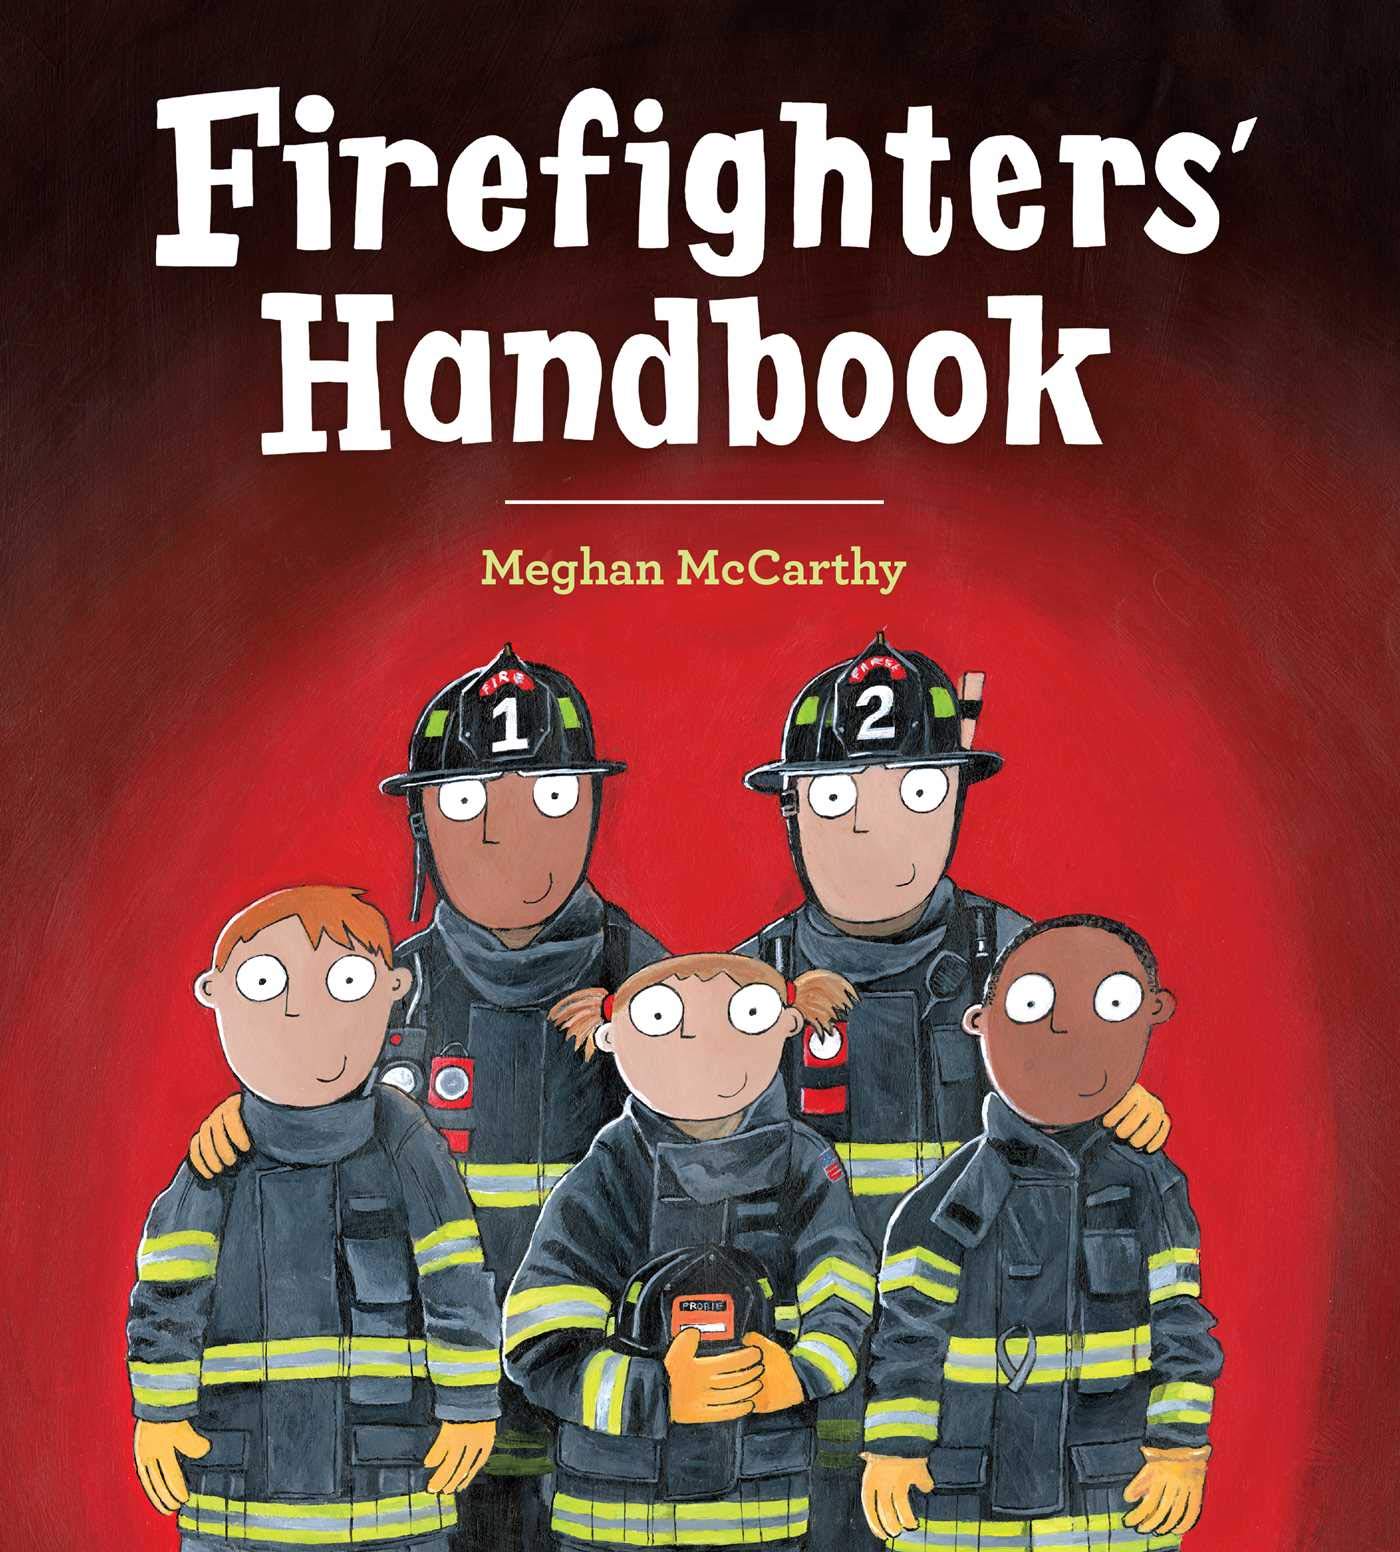 Firefighter's handbook